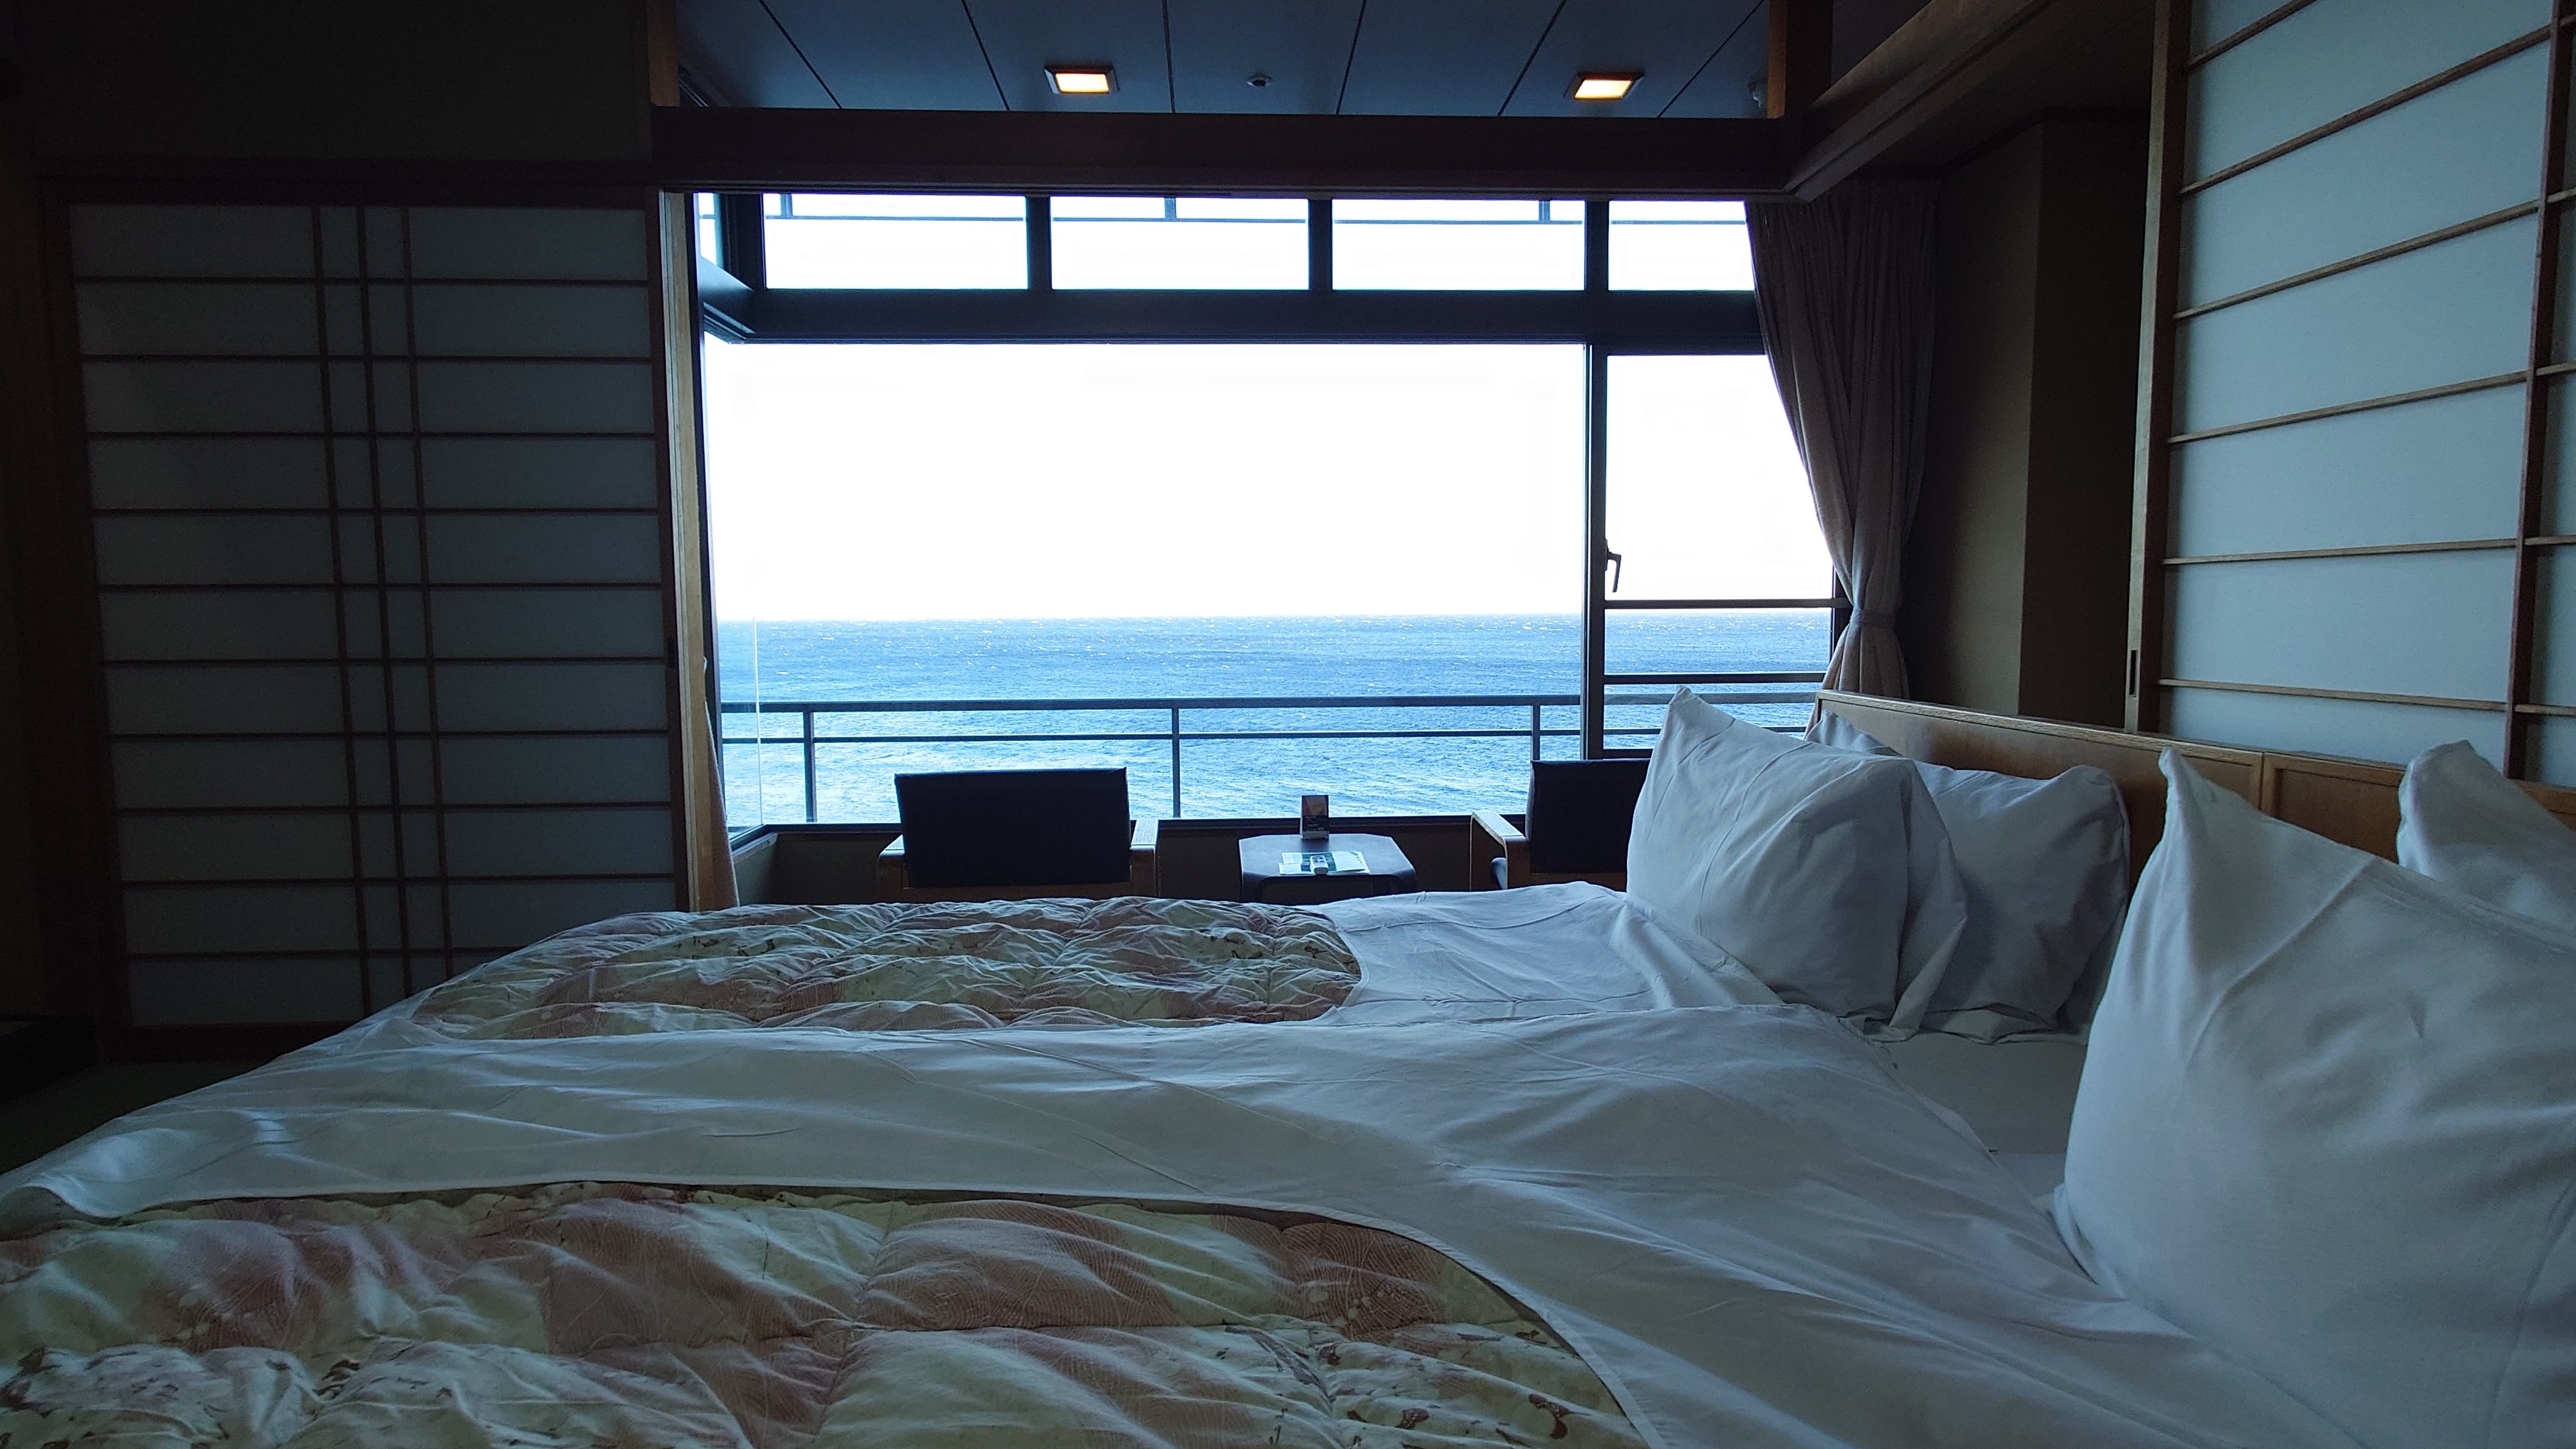 [Non-smoking room] Sea side, low floor, Japanese style room, 10 tatami mats, twin bed + wide veranda, 45 square meters